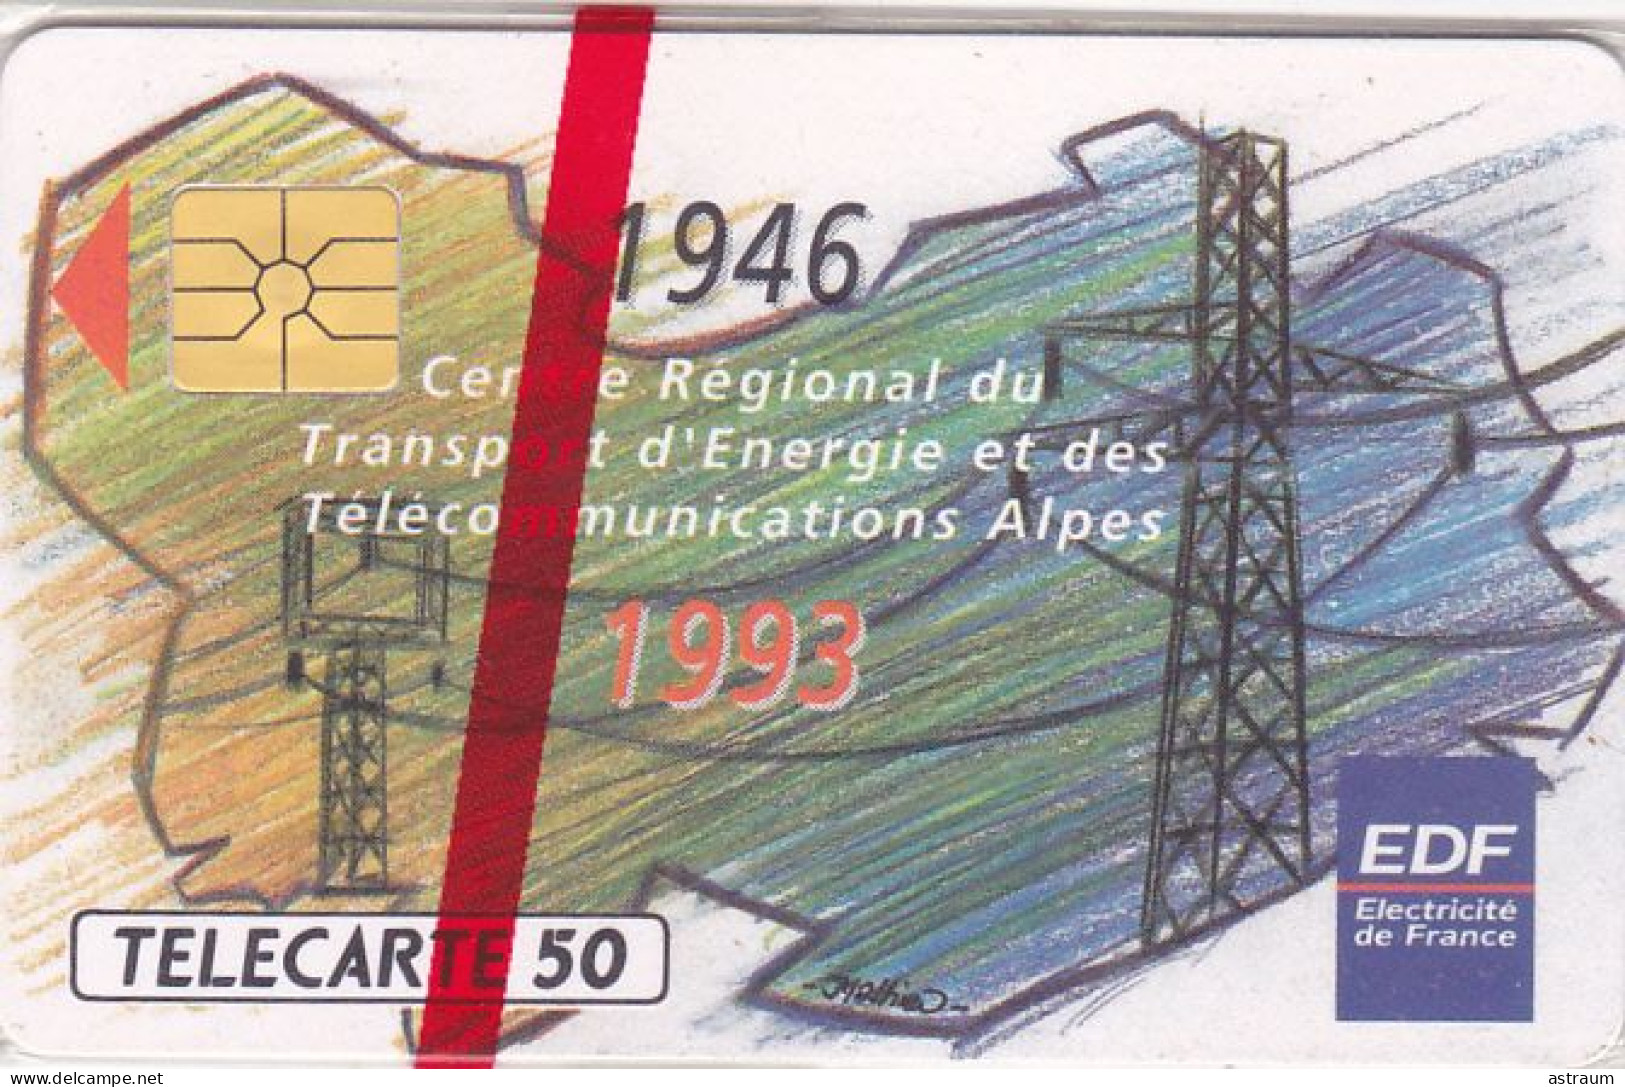 Telecarte Privée / Publique En524 NSB - Crtt Alpes - 50 U - Gem - 1992 - 50 Einheiten